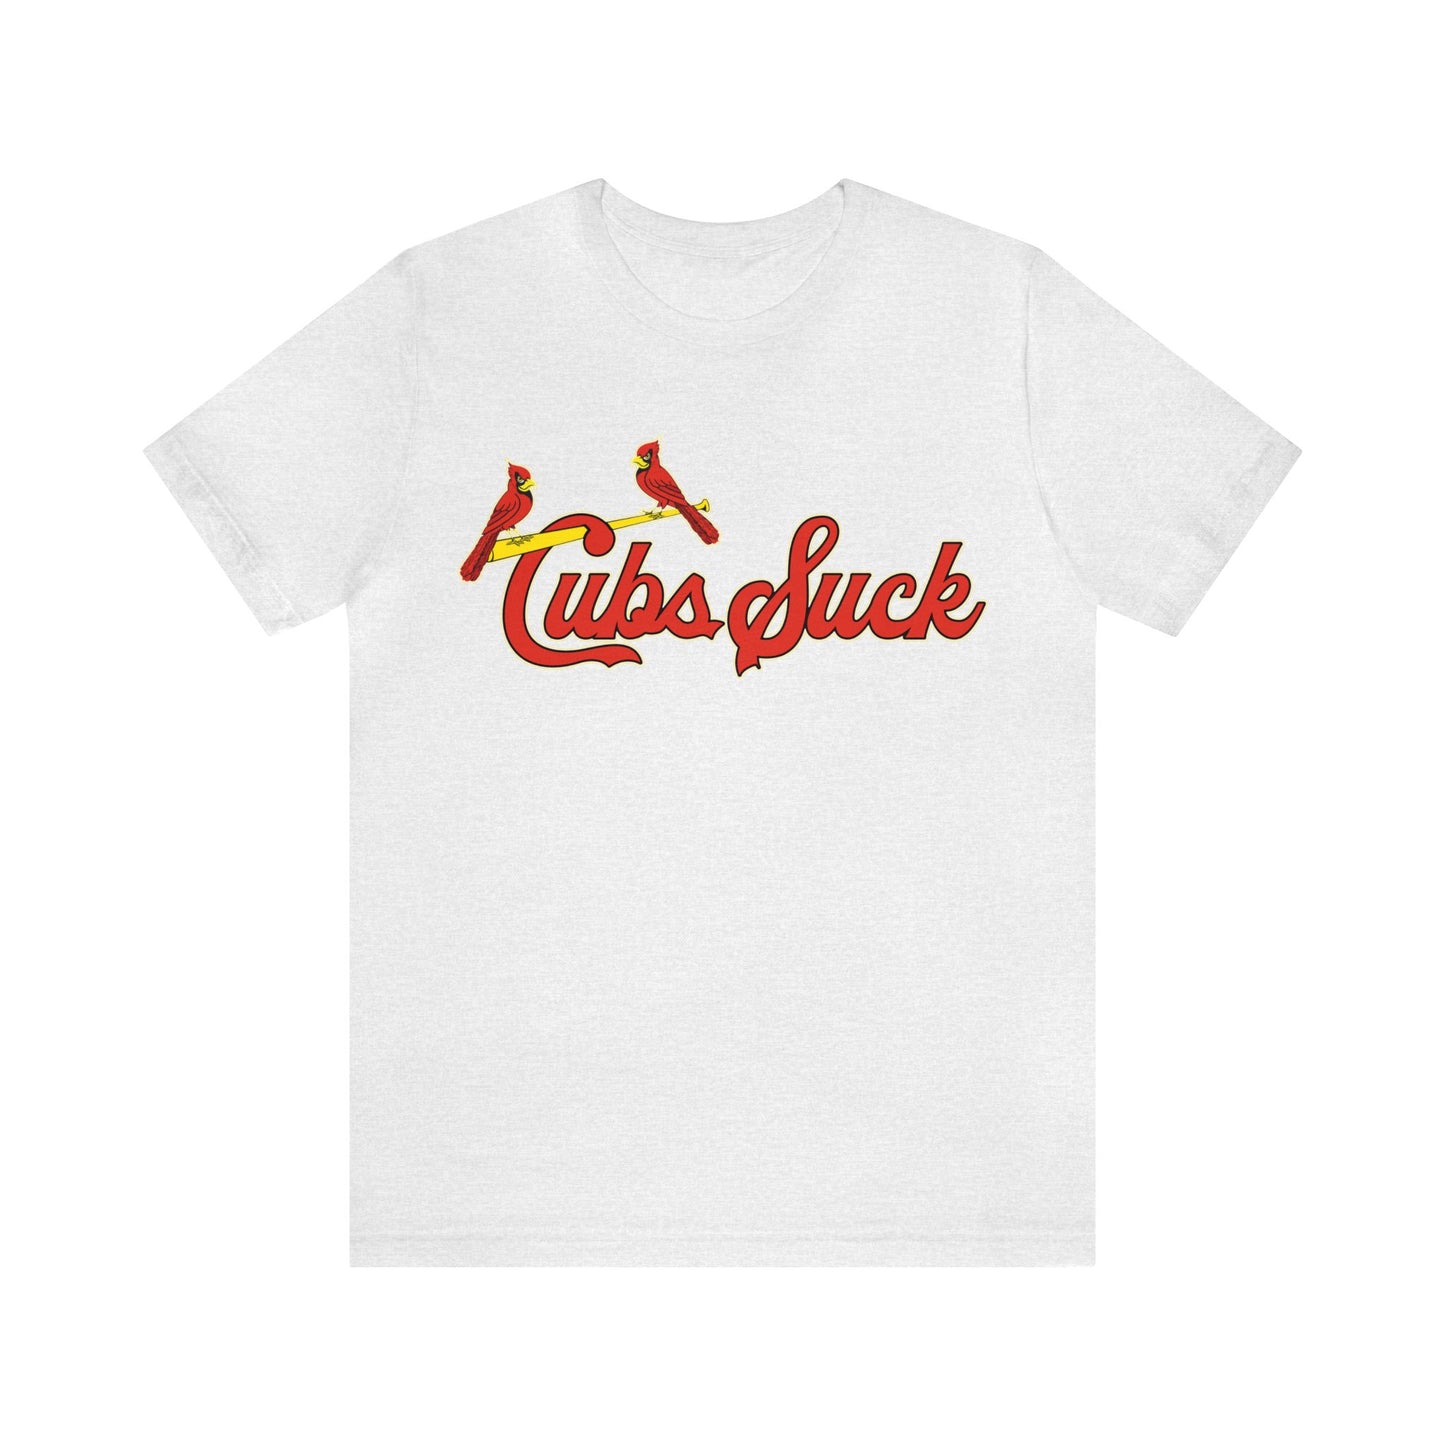 The Cubbs Suck (for St. Louis Cardinal fans) - Unisex Jersey Short Sleeve Tee